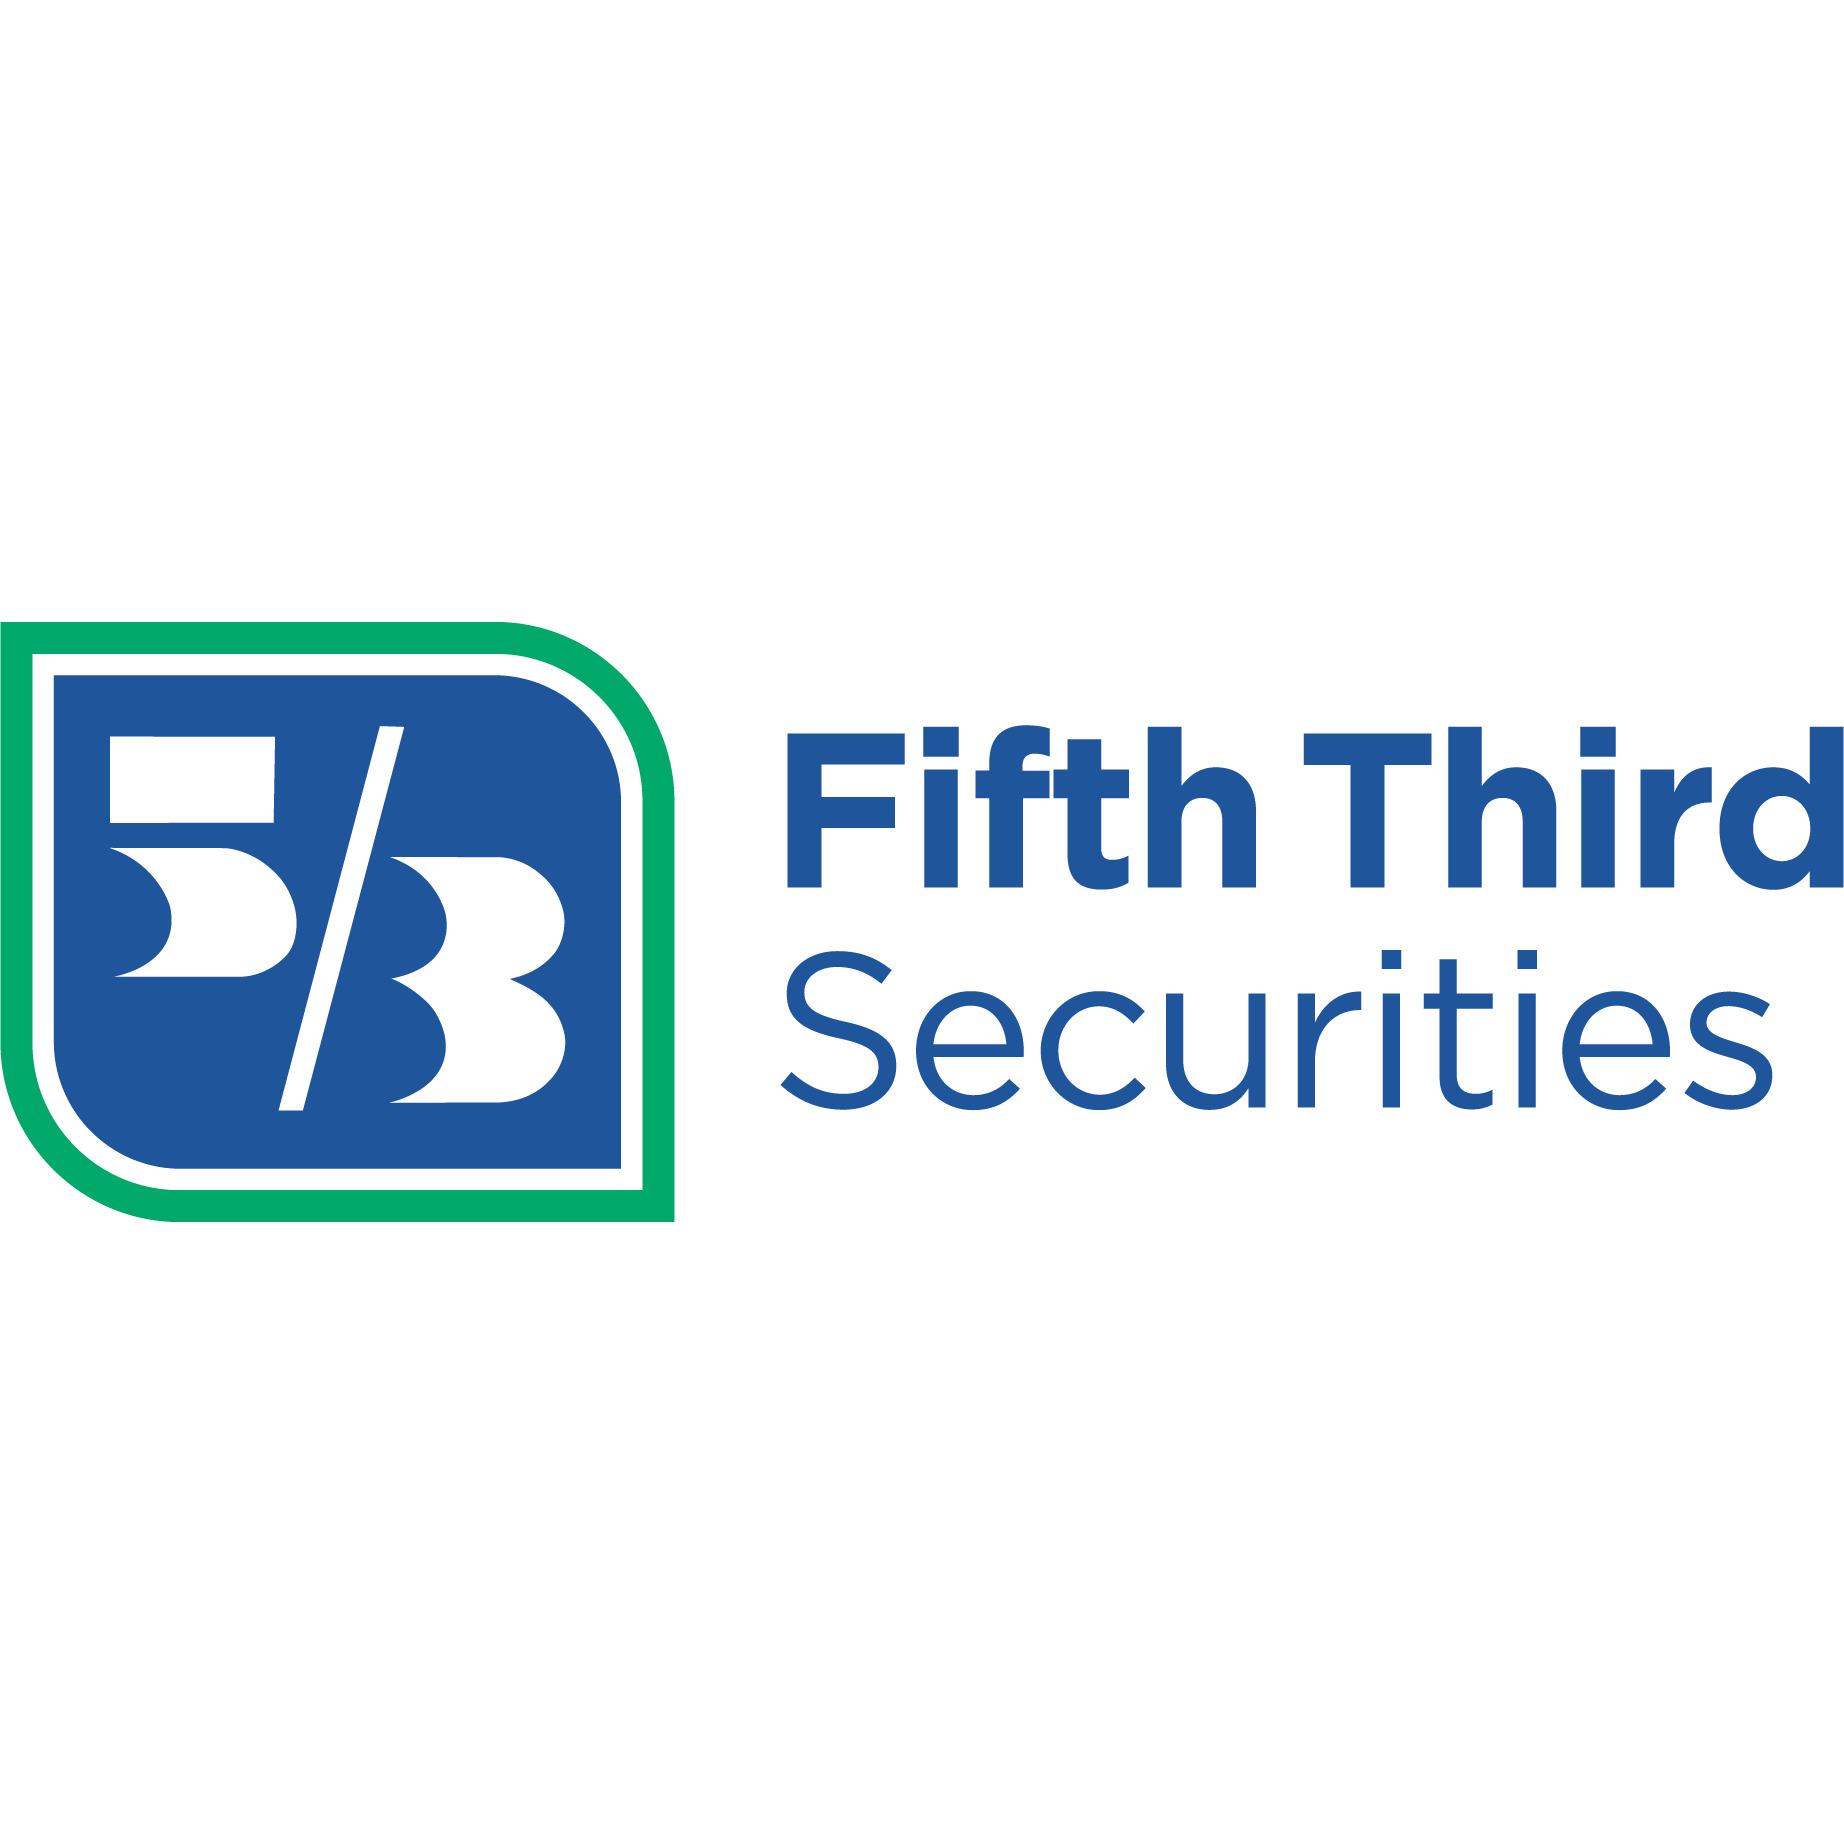 Fifth Third Securities - Lisa Miller